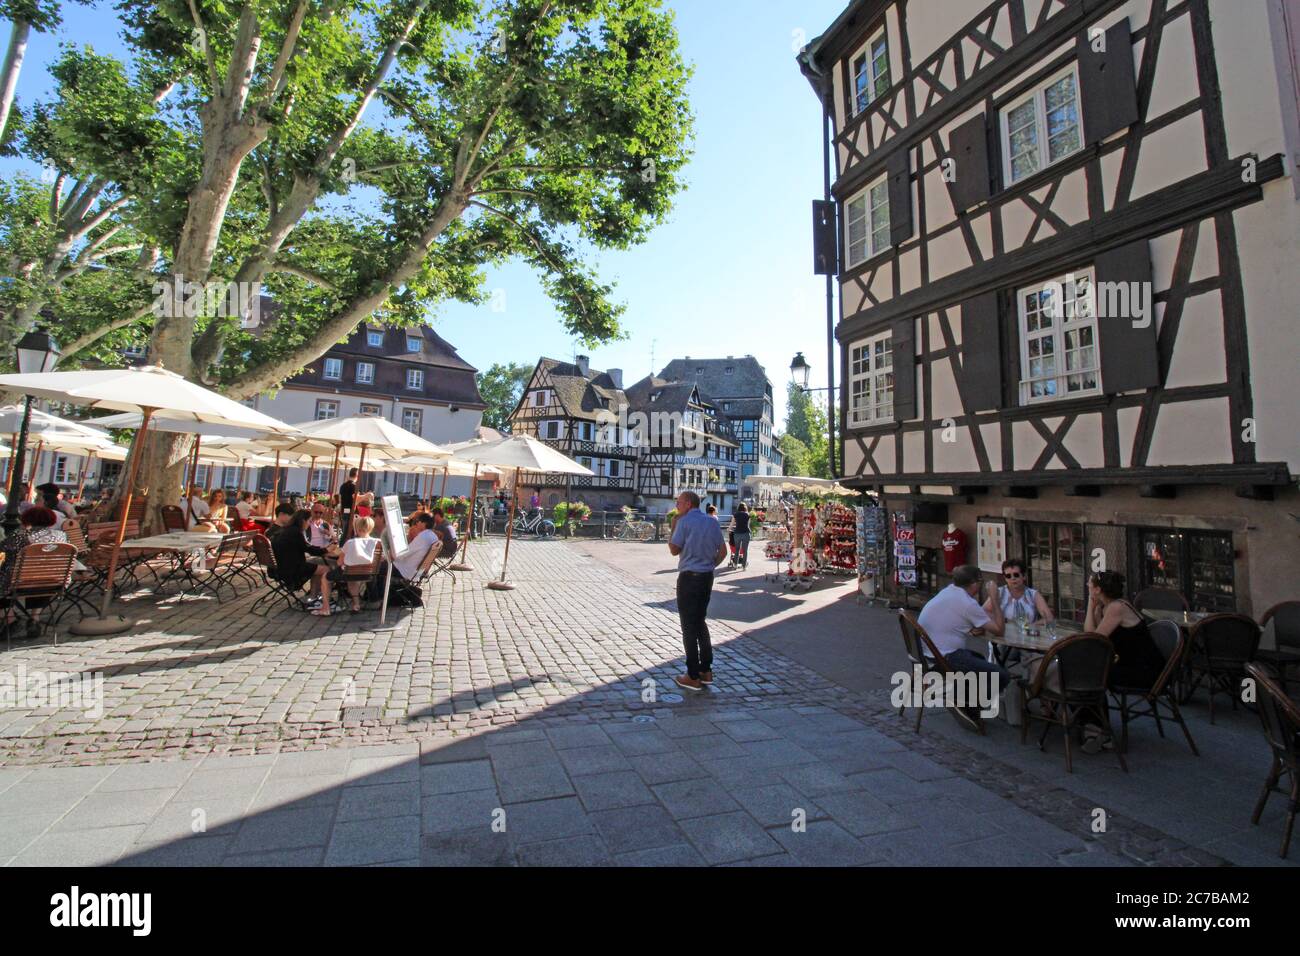 La Petite France, historical old town quarter of Strasbourg Stock Photo